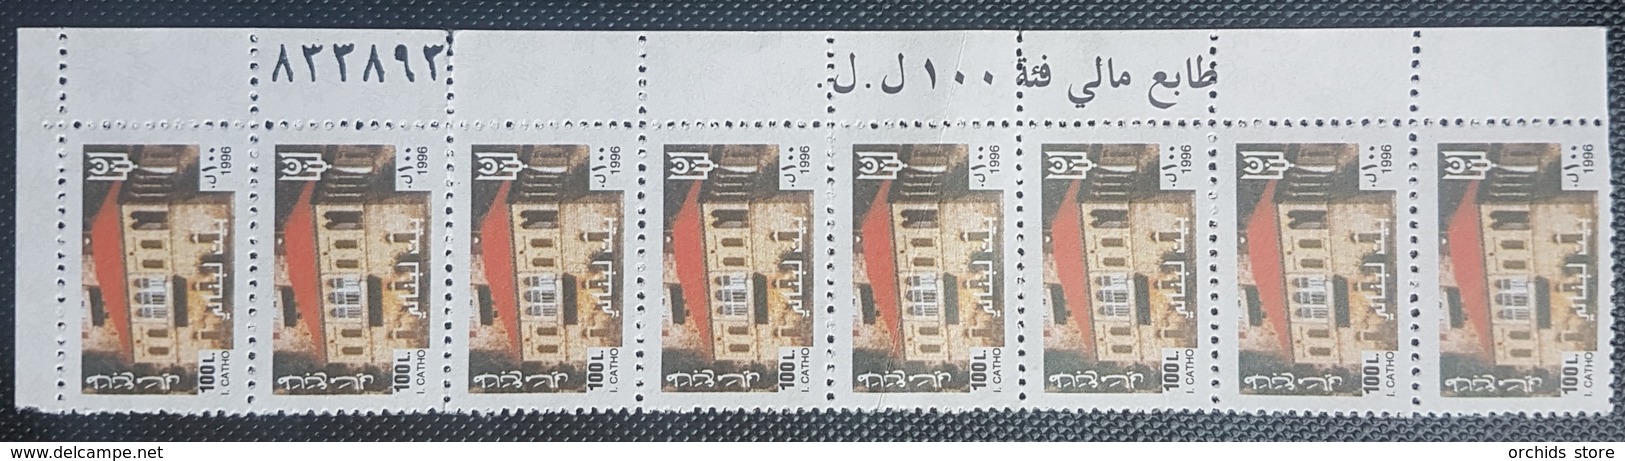 NO11 - Lebanon 1996 Fiscal Revenue Stamp 100L Old House - Blk/8 - MNH - Lebanon